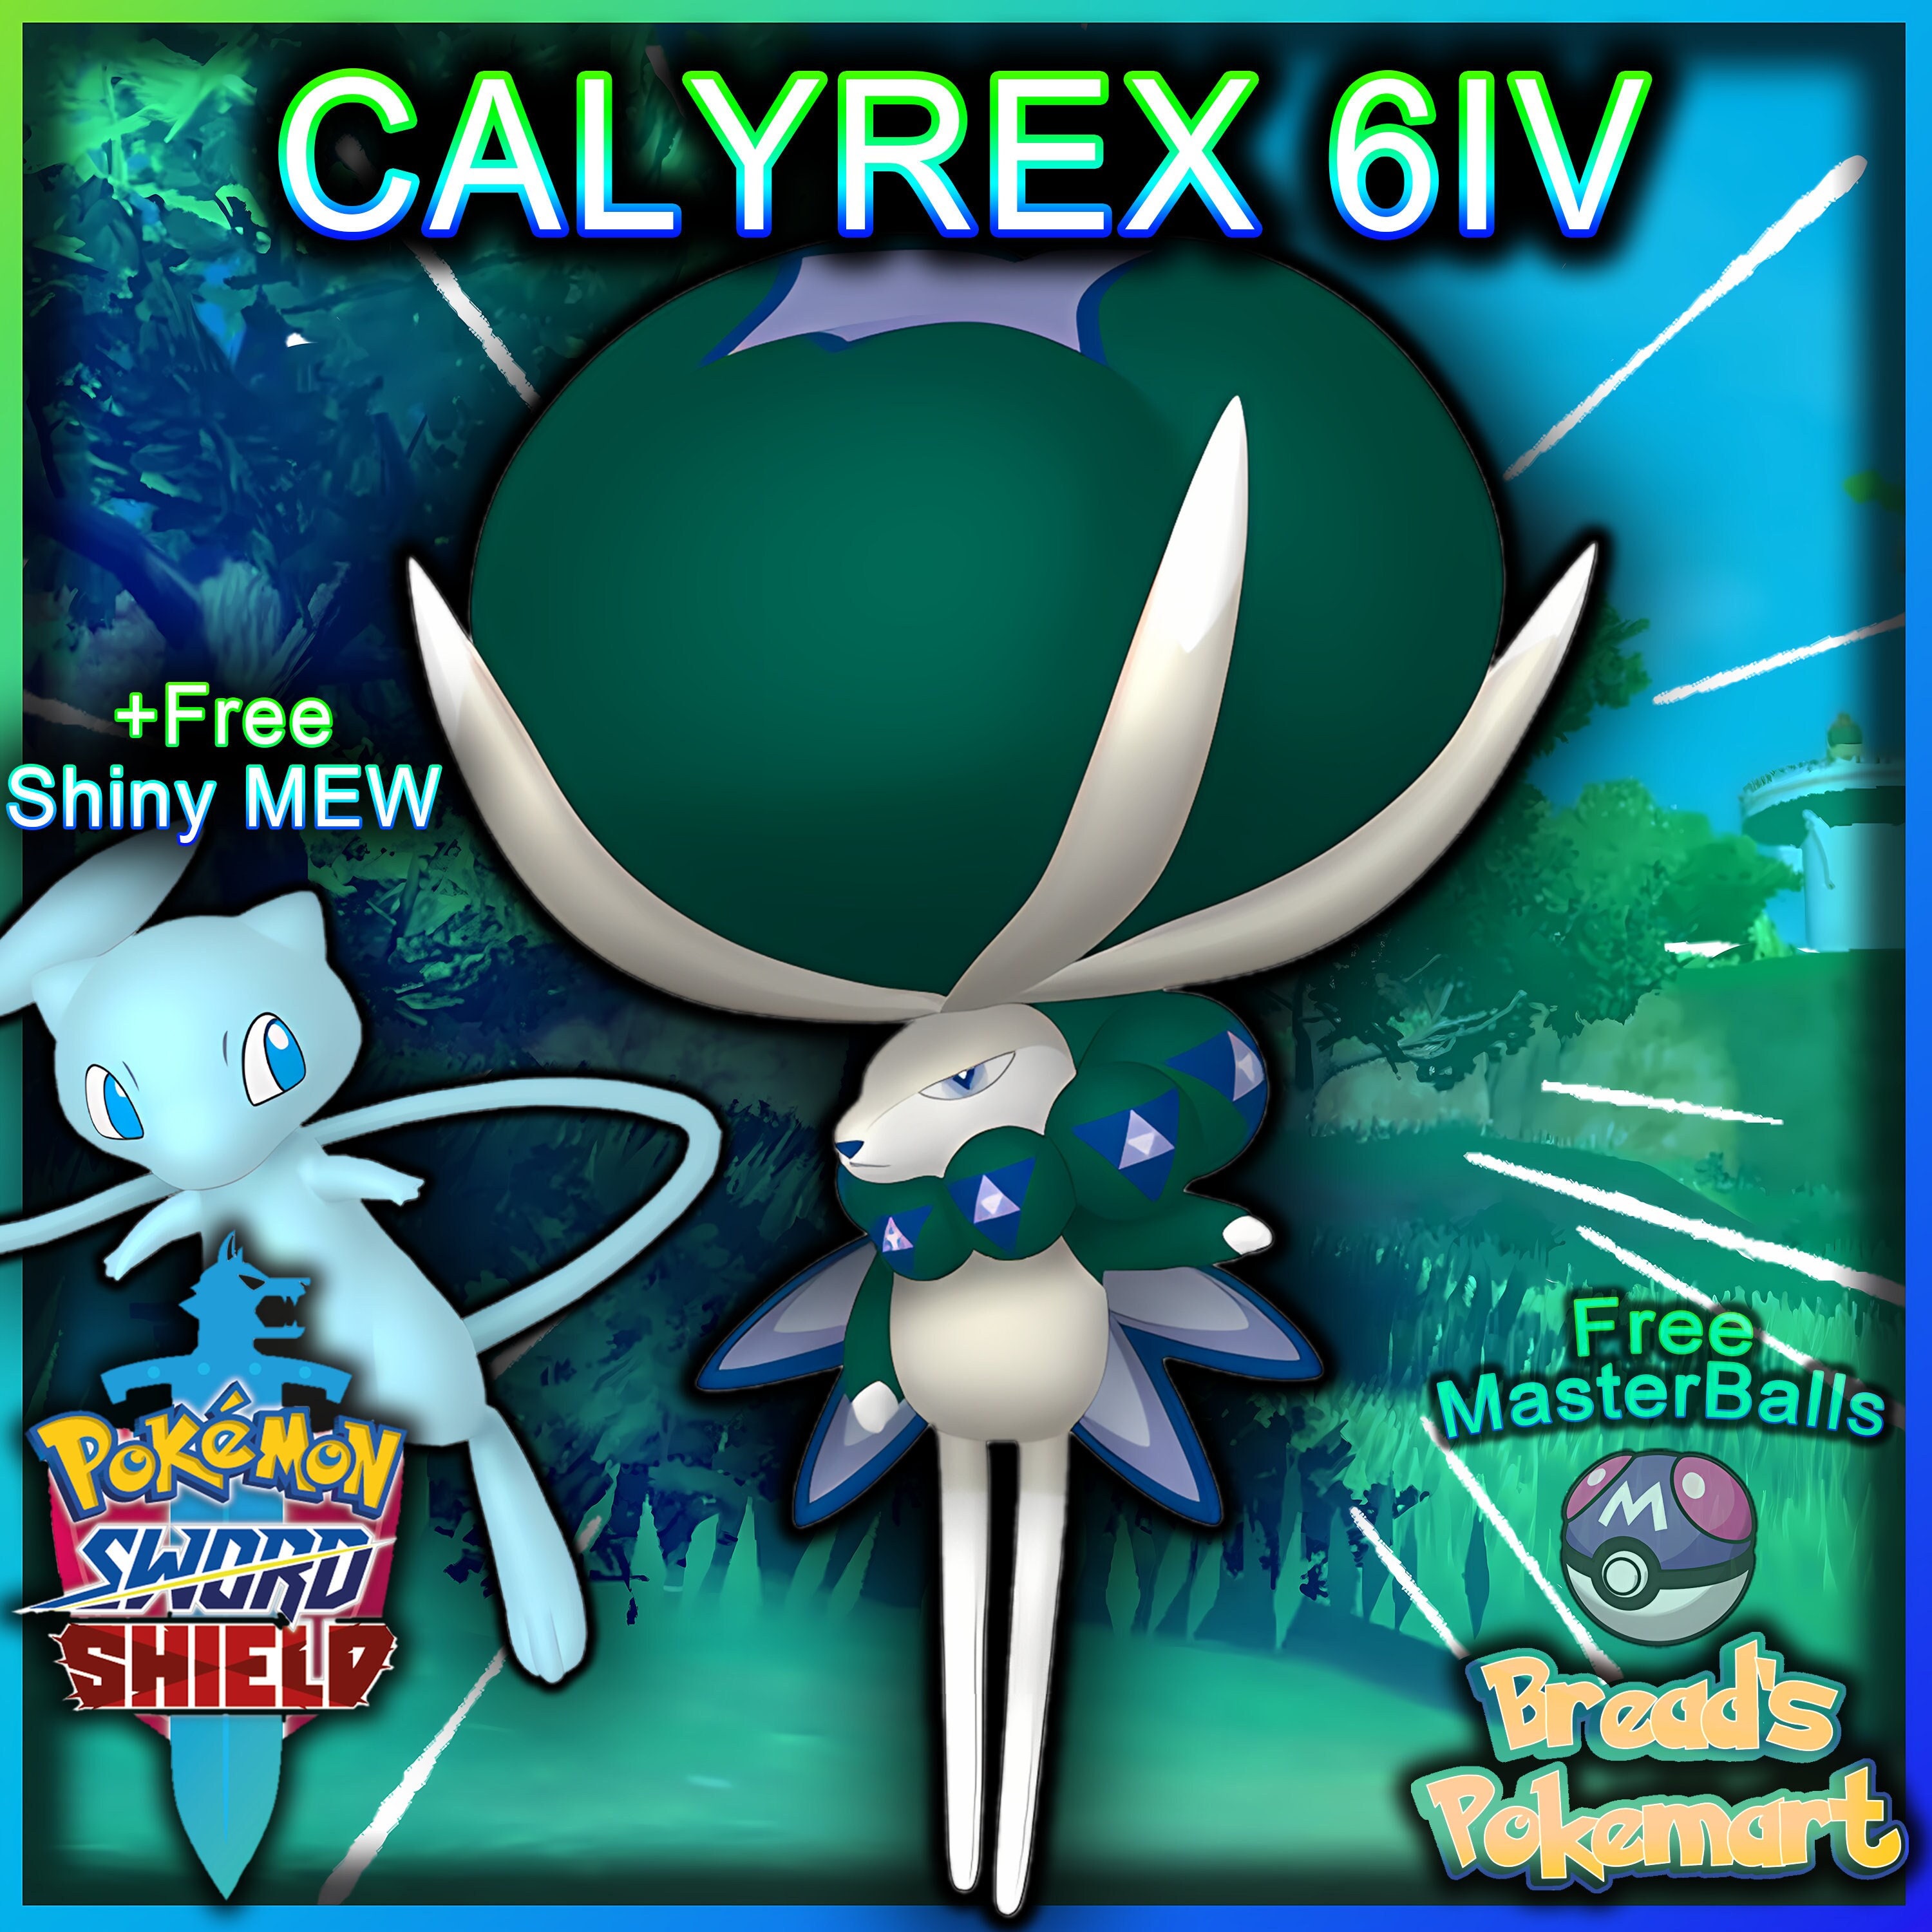 Galar ZAPDOS ✨ SHINY 6IV ✨ Pokemon SWORD and SHIELD Galarian Bird Event +EVs